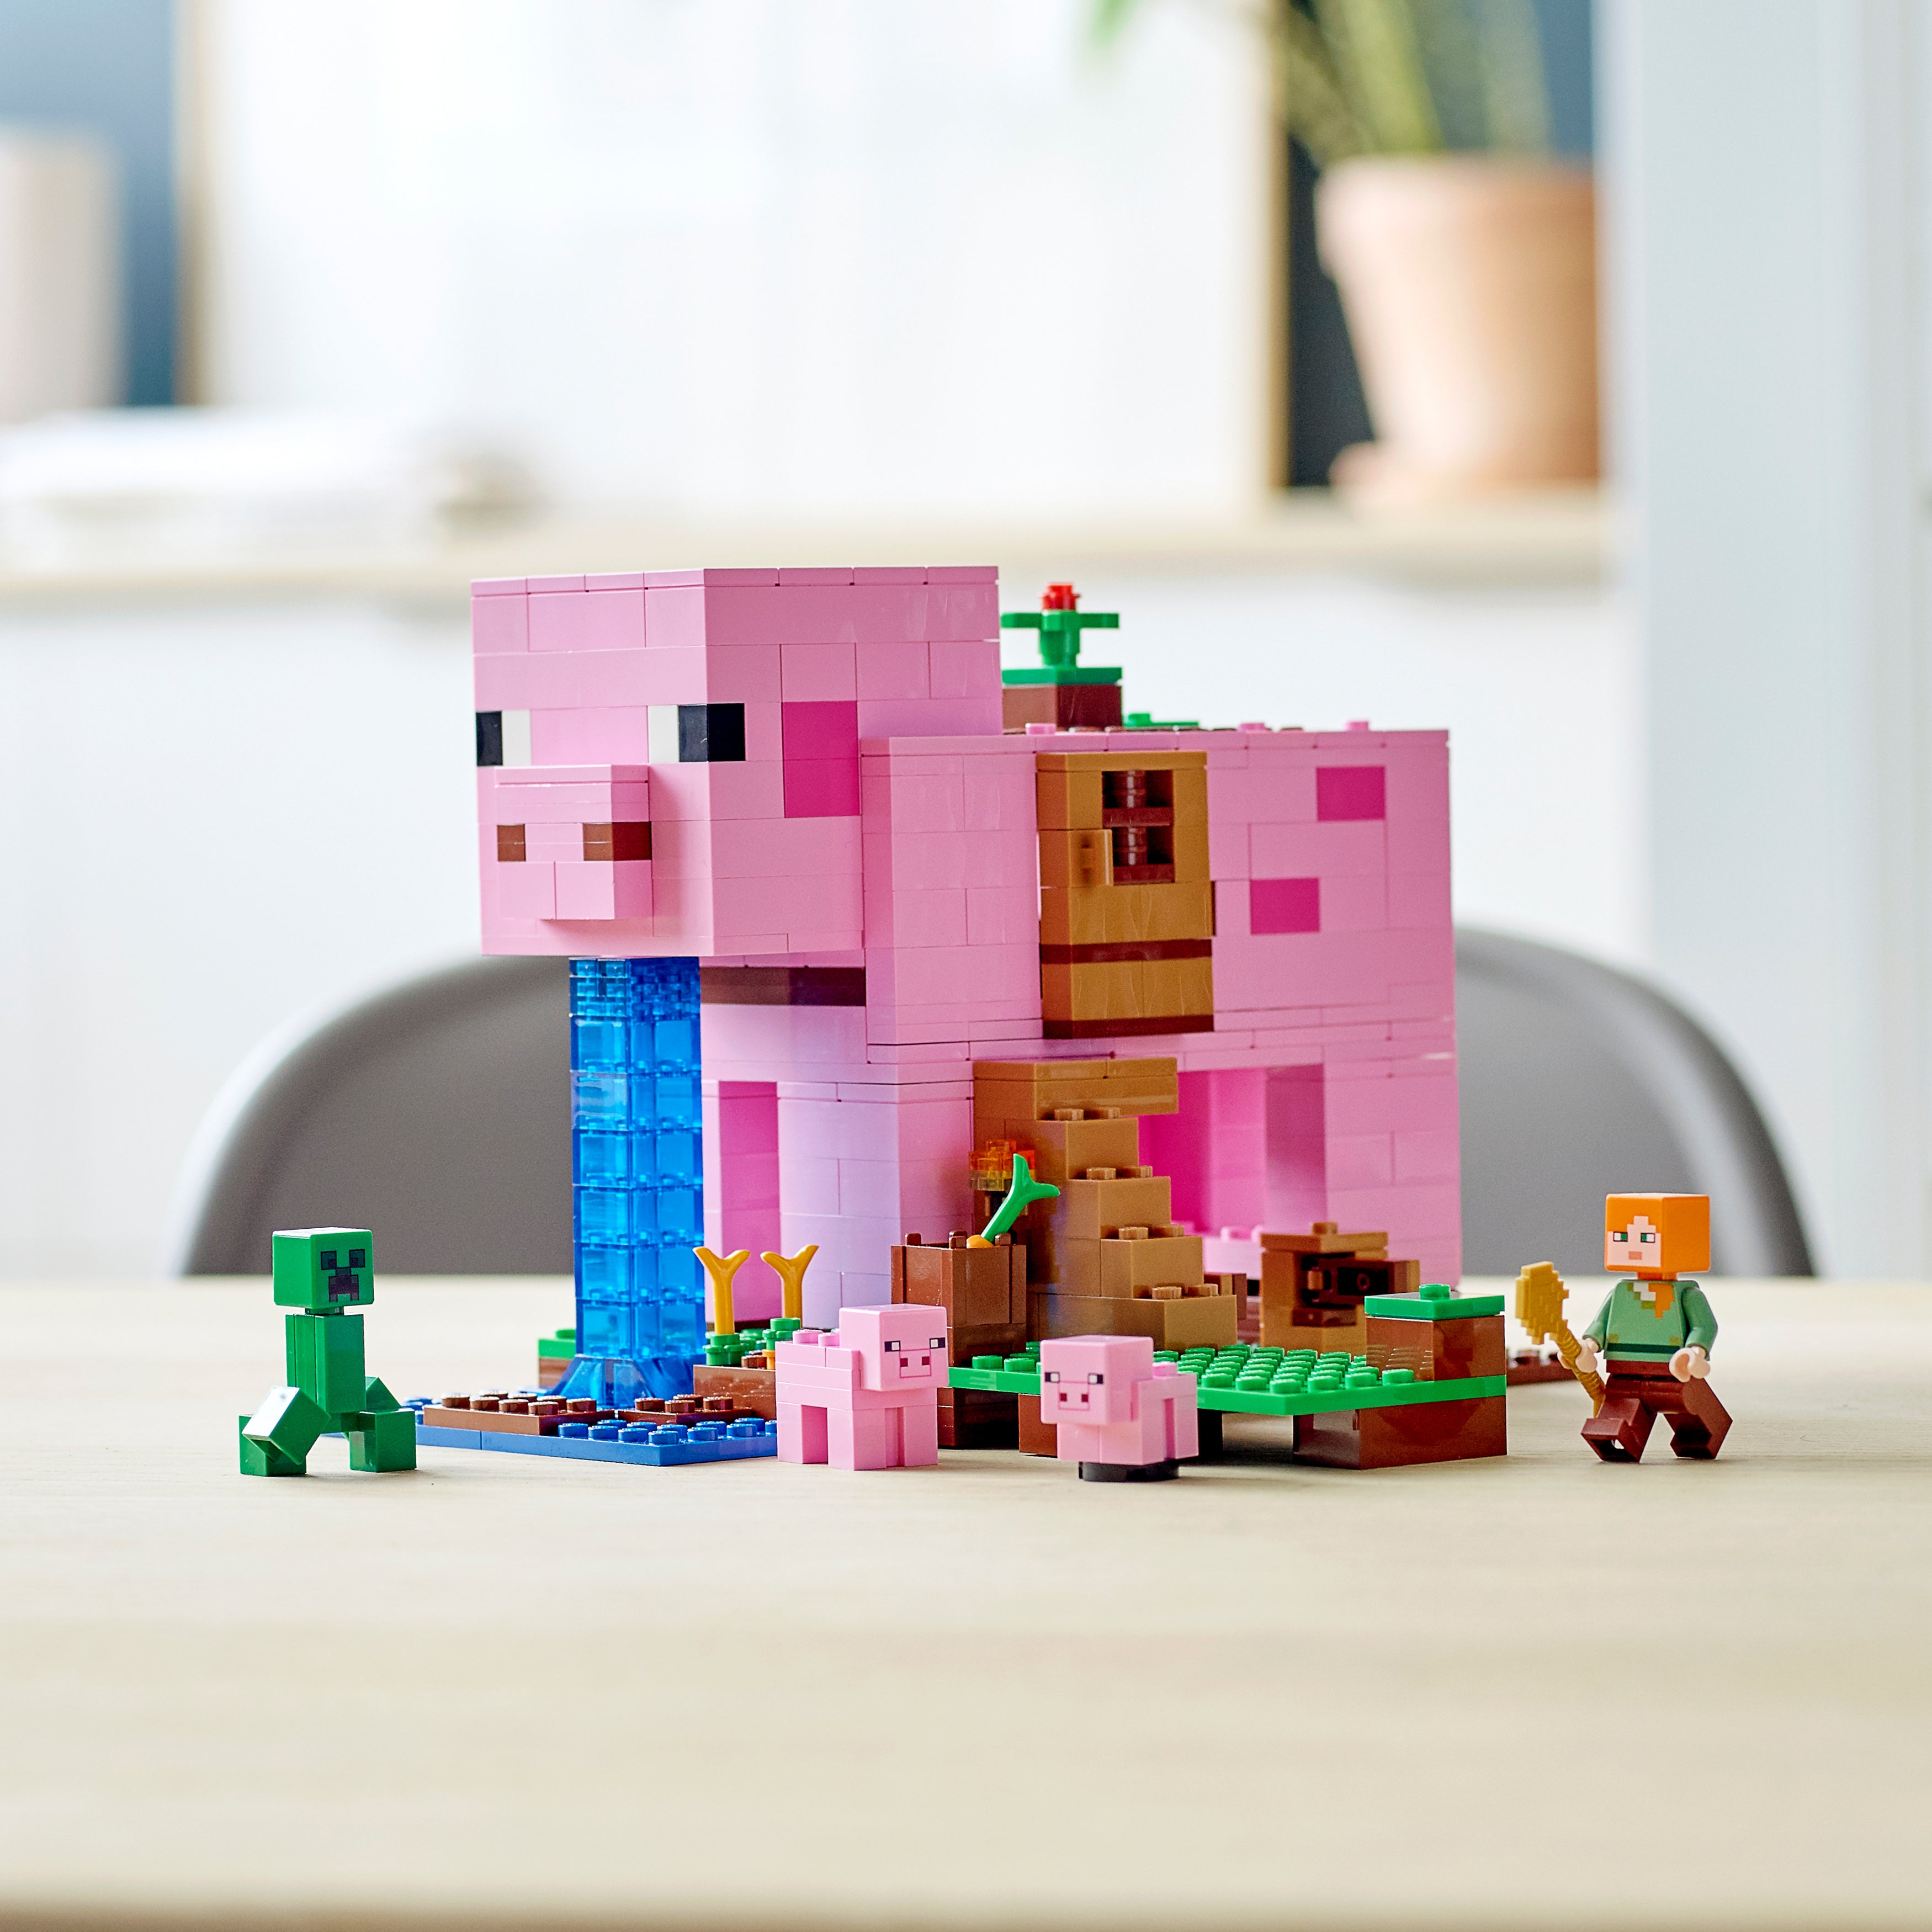 Lego 21170 The Pig House